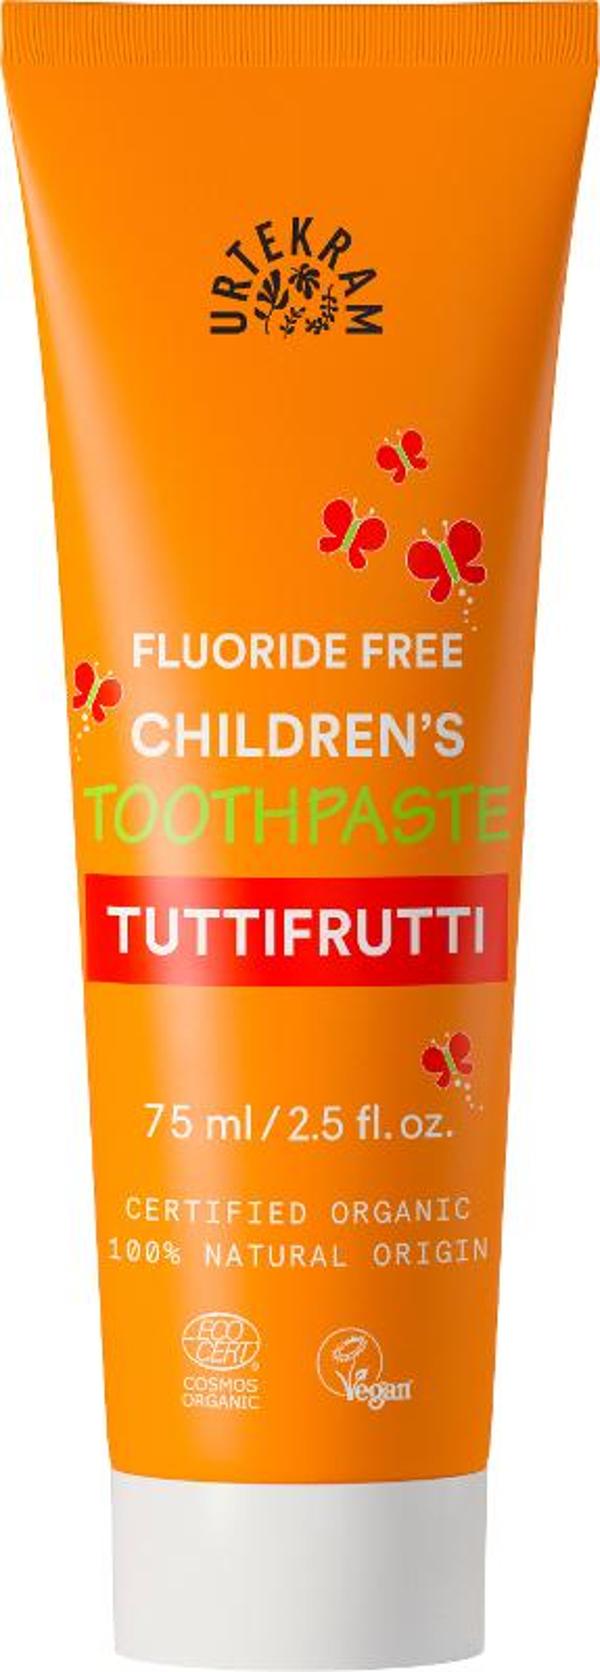 Produktfoto zu Tuttifrutti Kinderzahnpasta 75ml